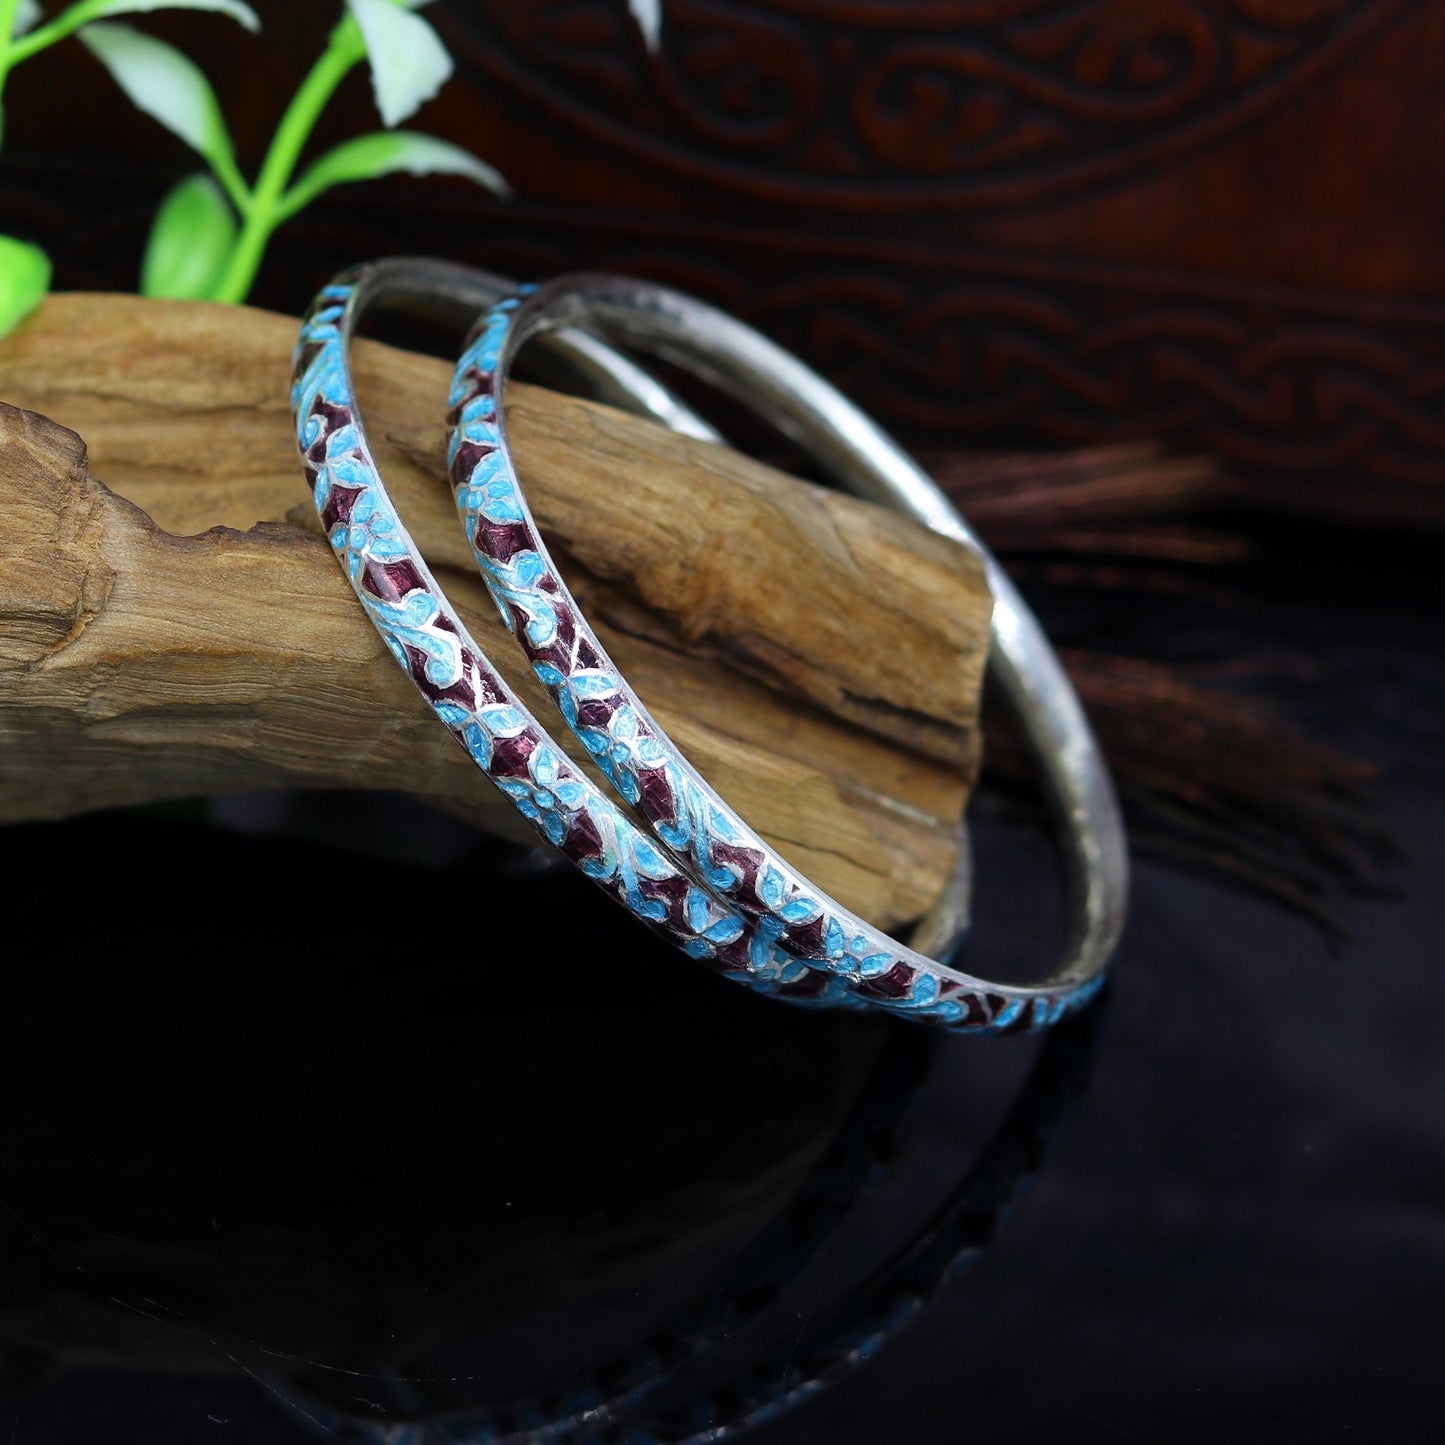 Customized pretty enamel work solid 925 sterling silver bangles kada bracelet for girl's stylish brides tribal jewelry Rajasthan nba110 - TRIBAL ORNAMENTS